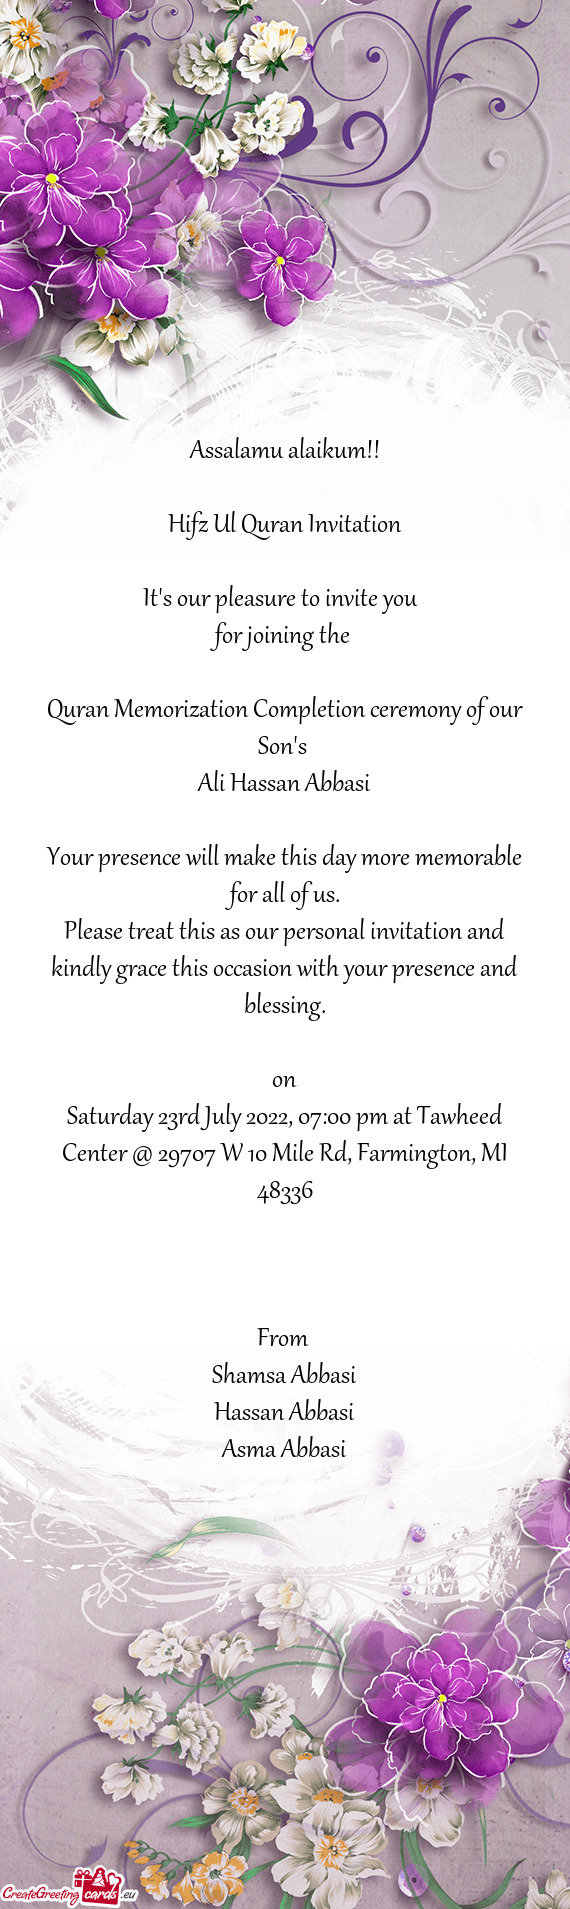 Hifz Ul Quran Invitation